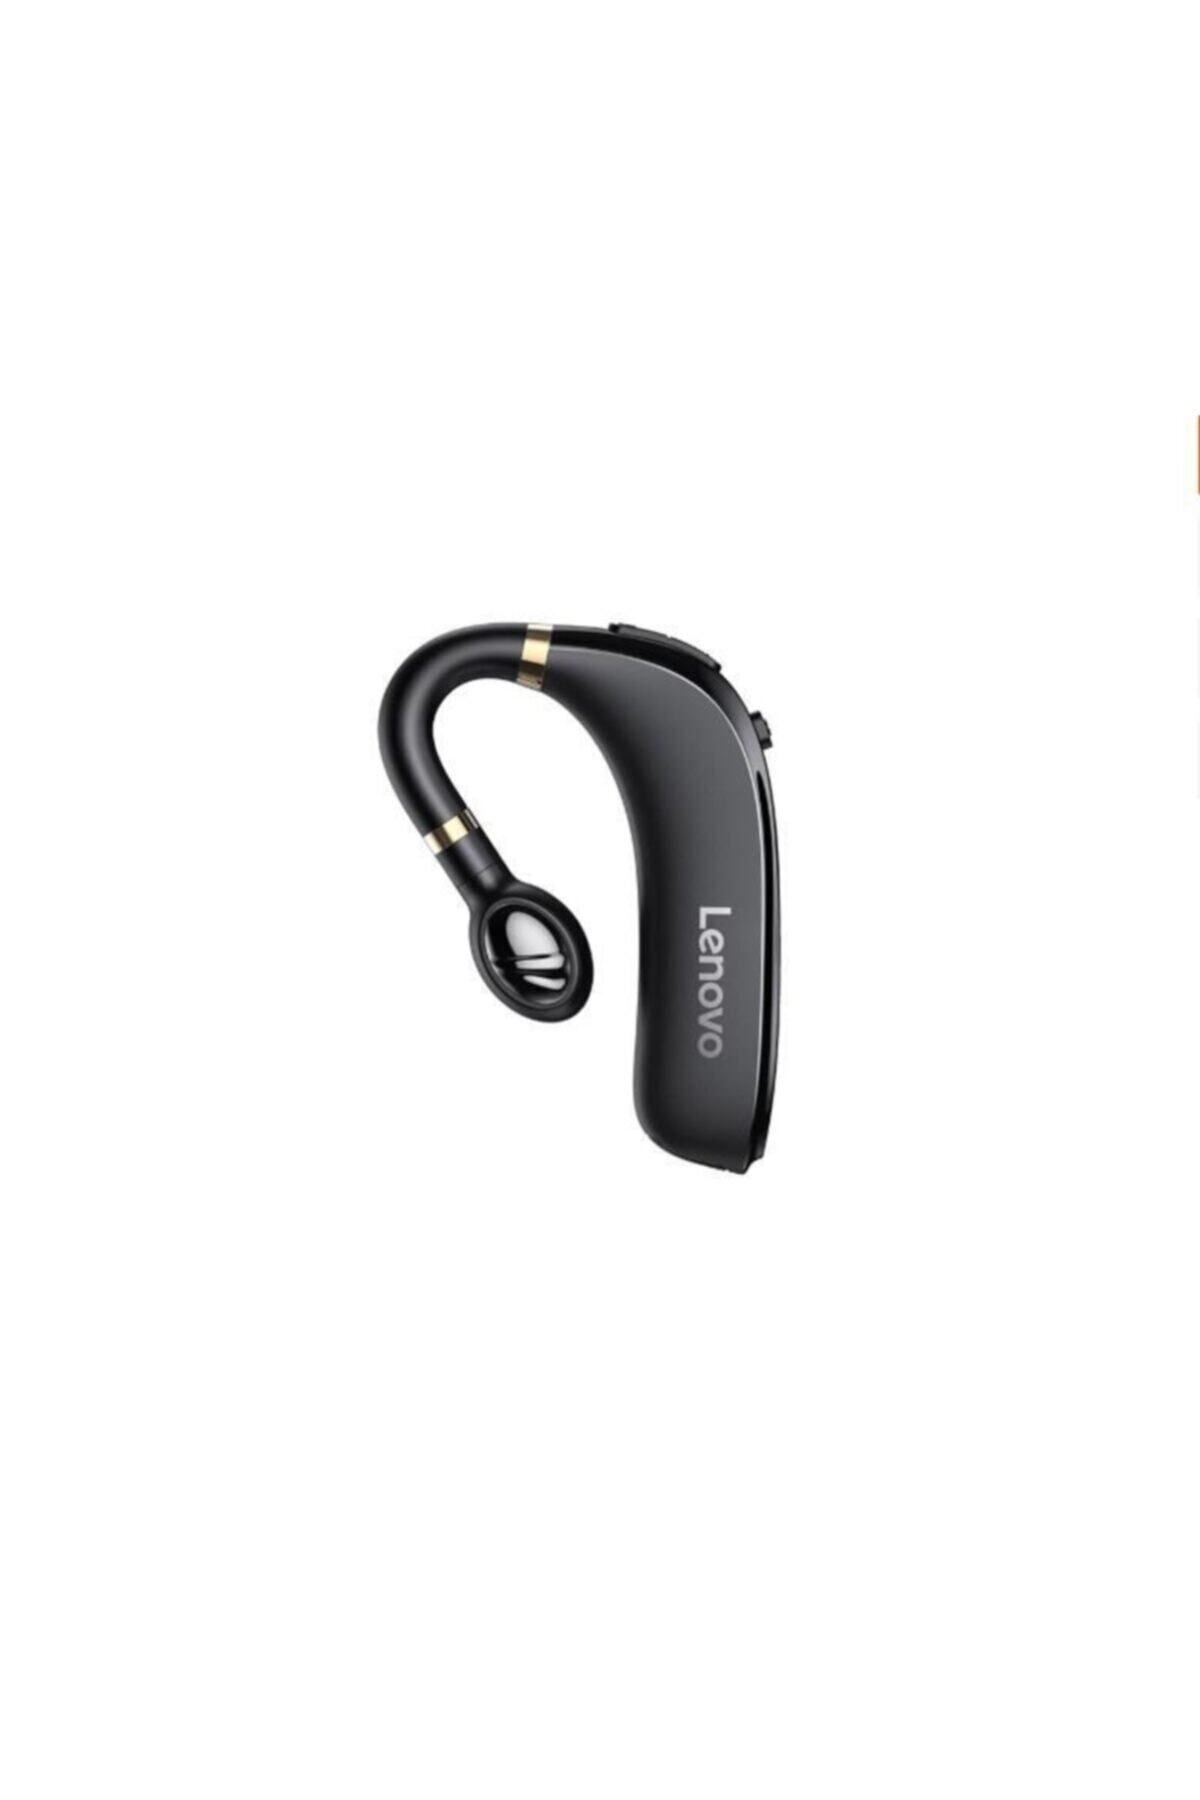 LENOVO Hx106 Bluetooth 5.0 Kapasiteli Kablosuz Kulaklık